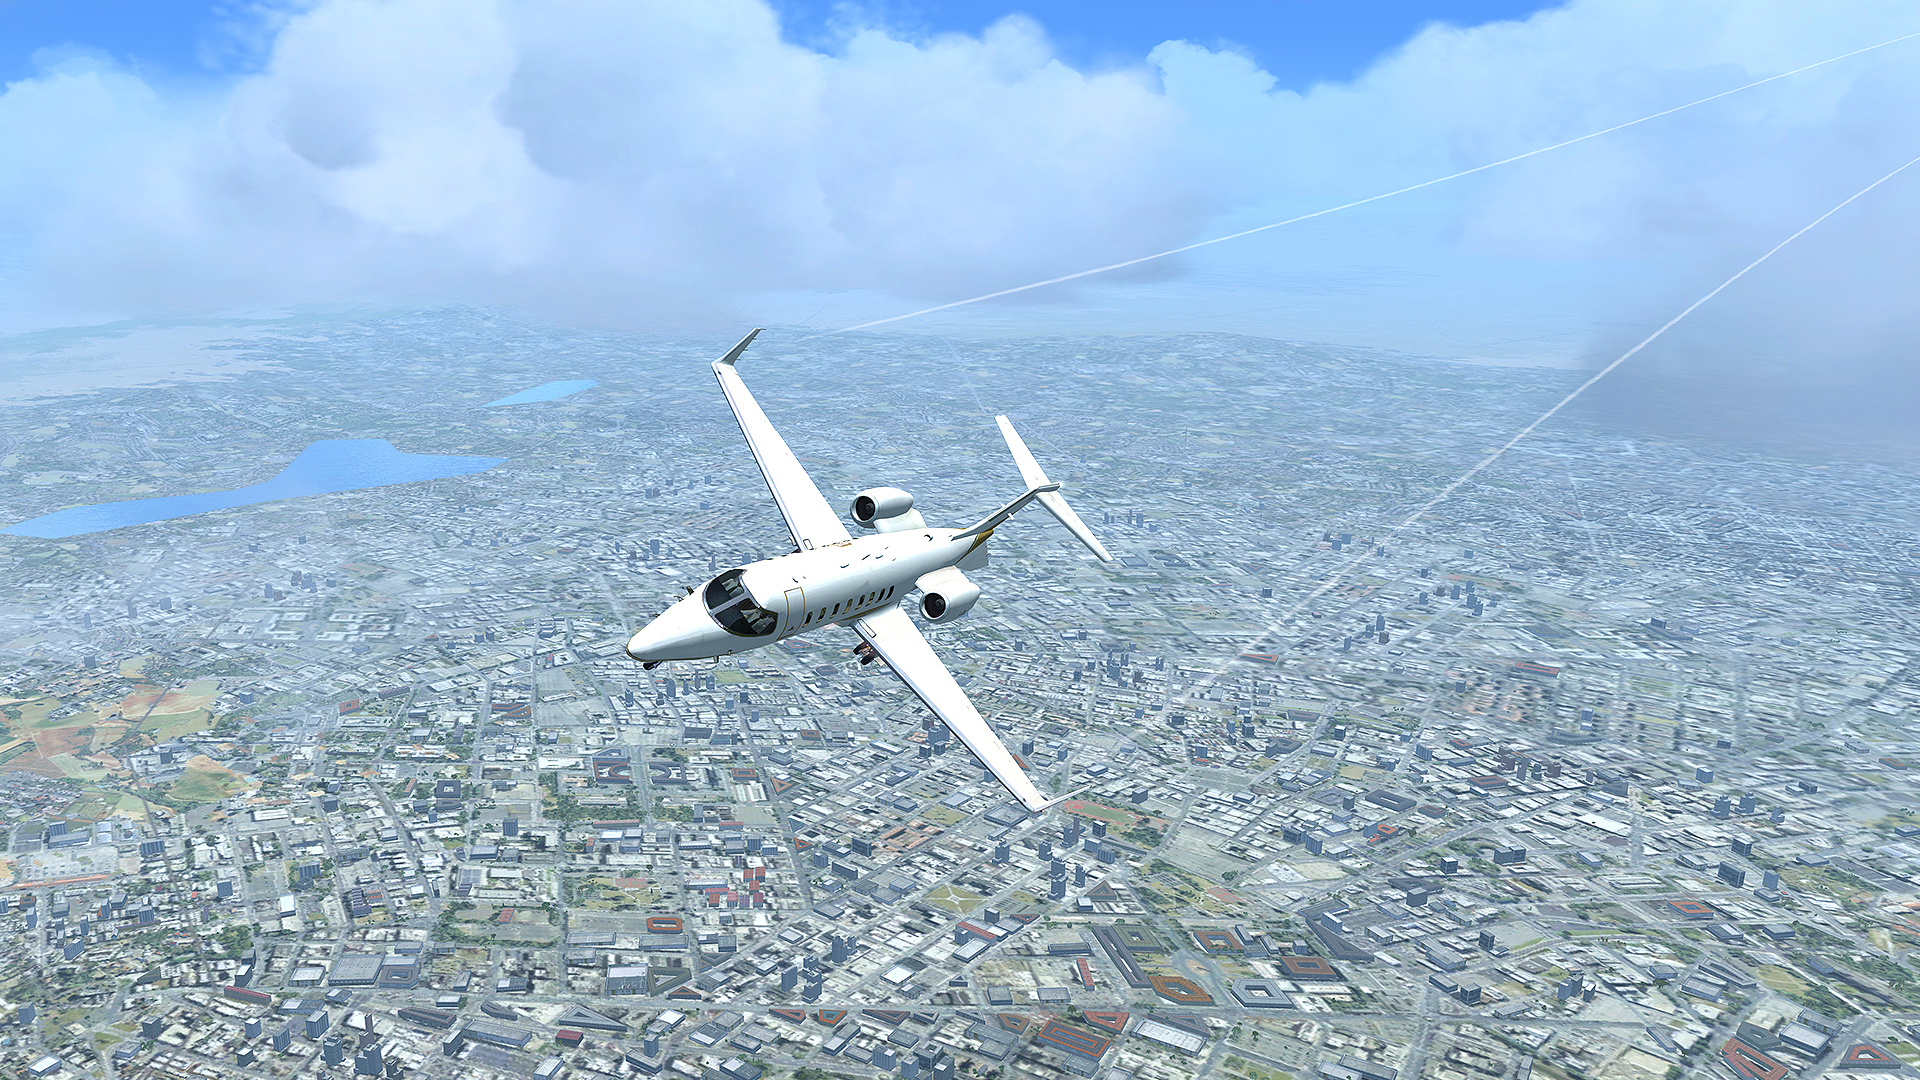 Microsoft Flight Simulator X PC Game Latest Version Free Download